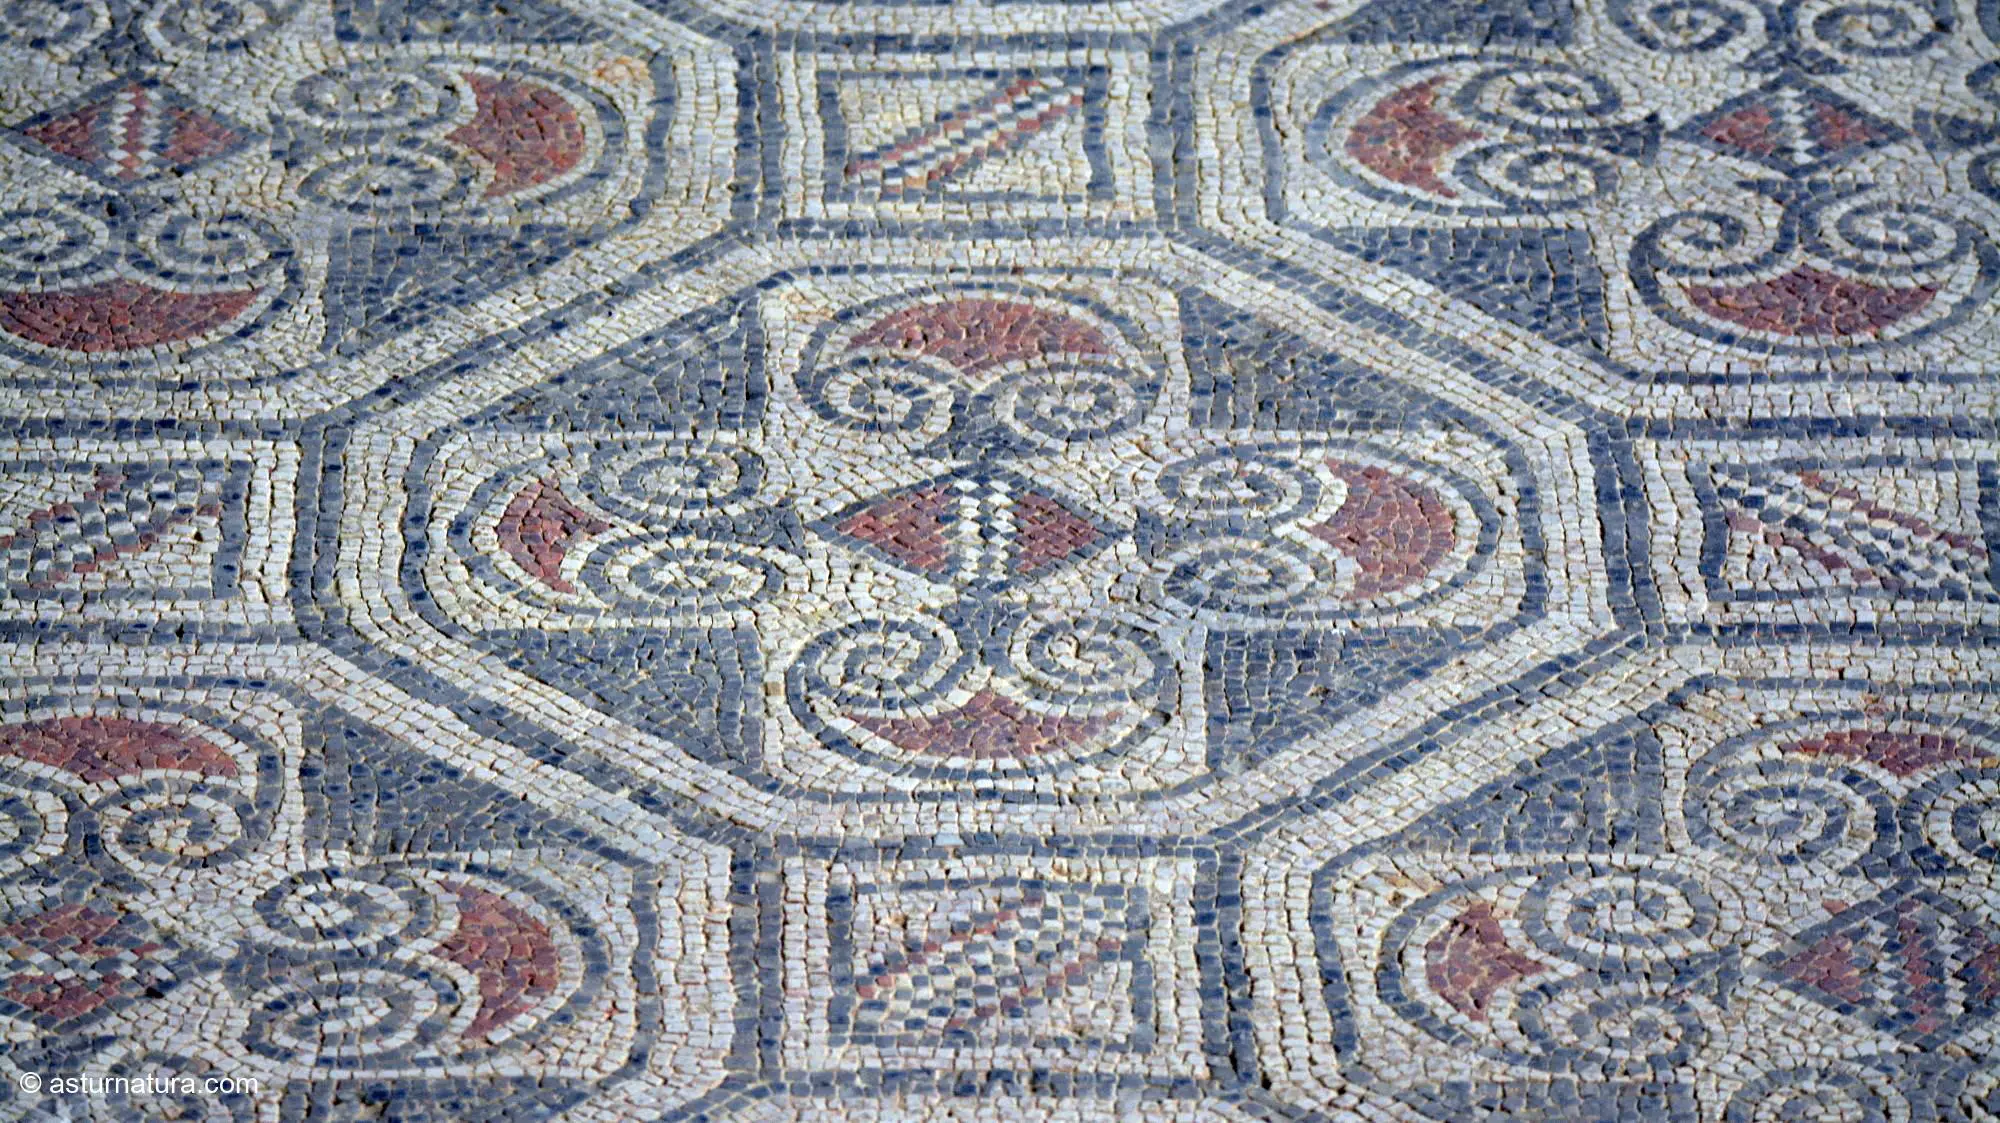 Detalle de mosaico en la Villa romana de La Olmeda